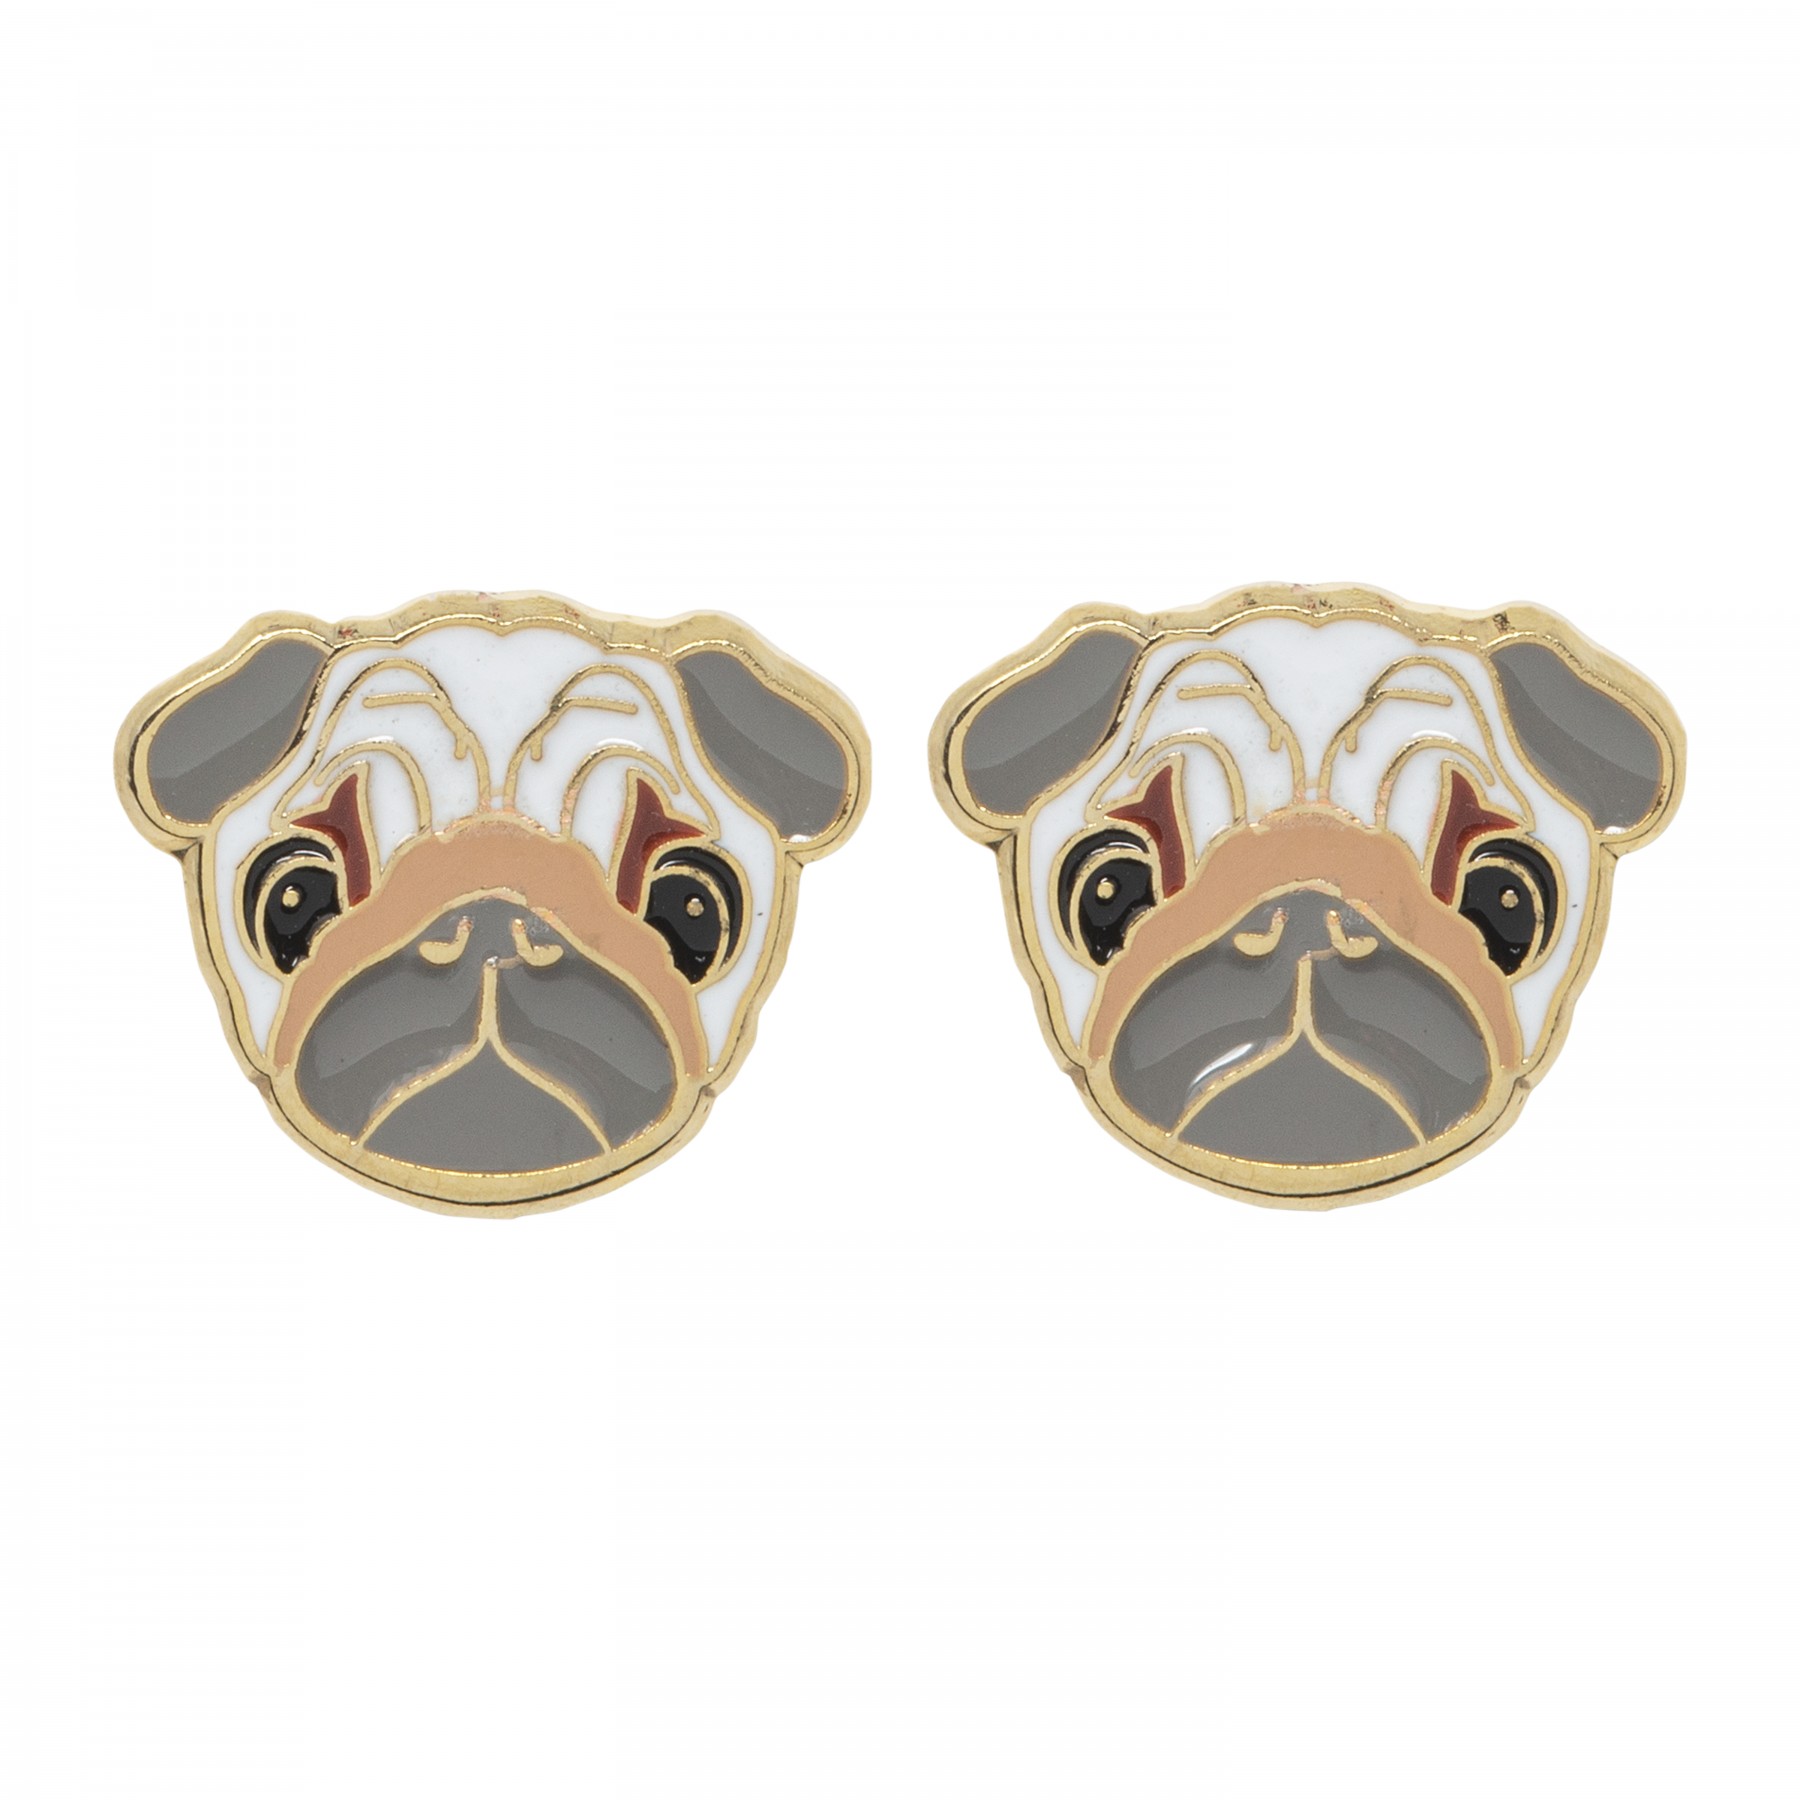 Pug earrings